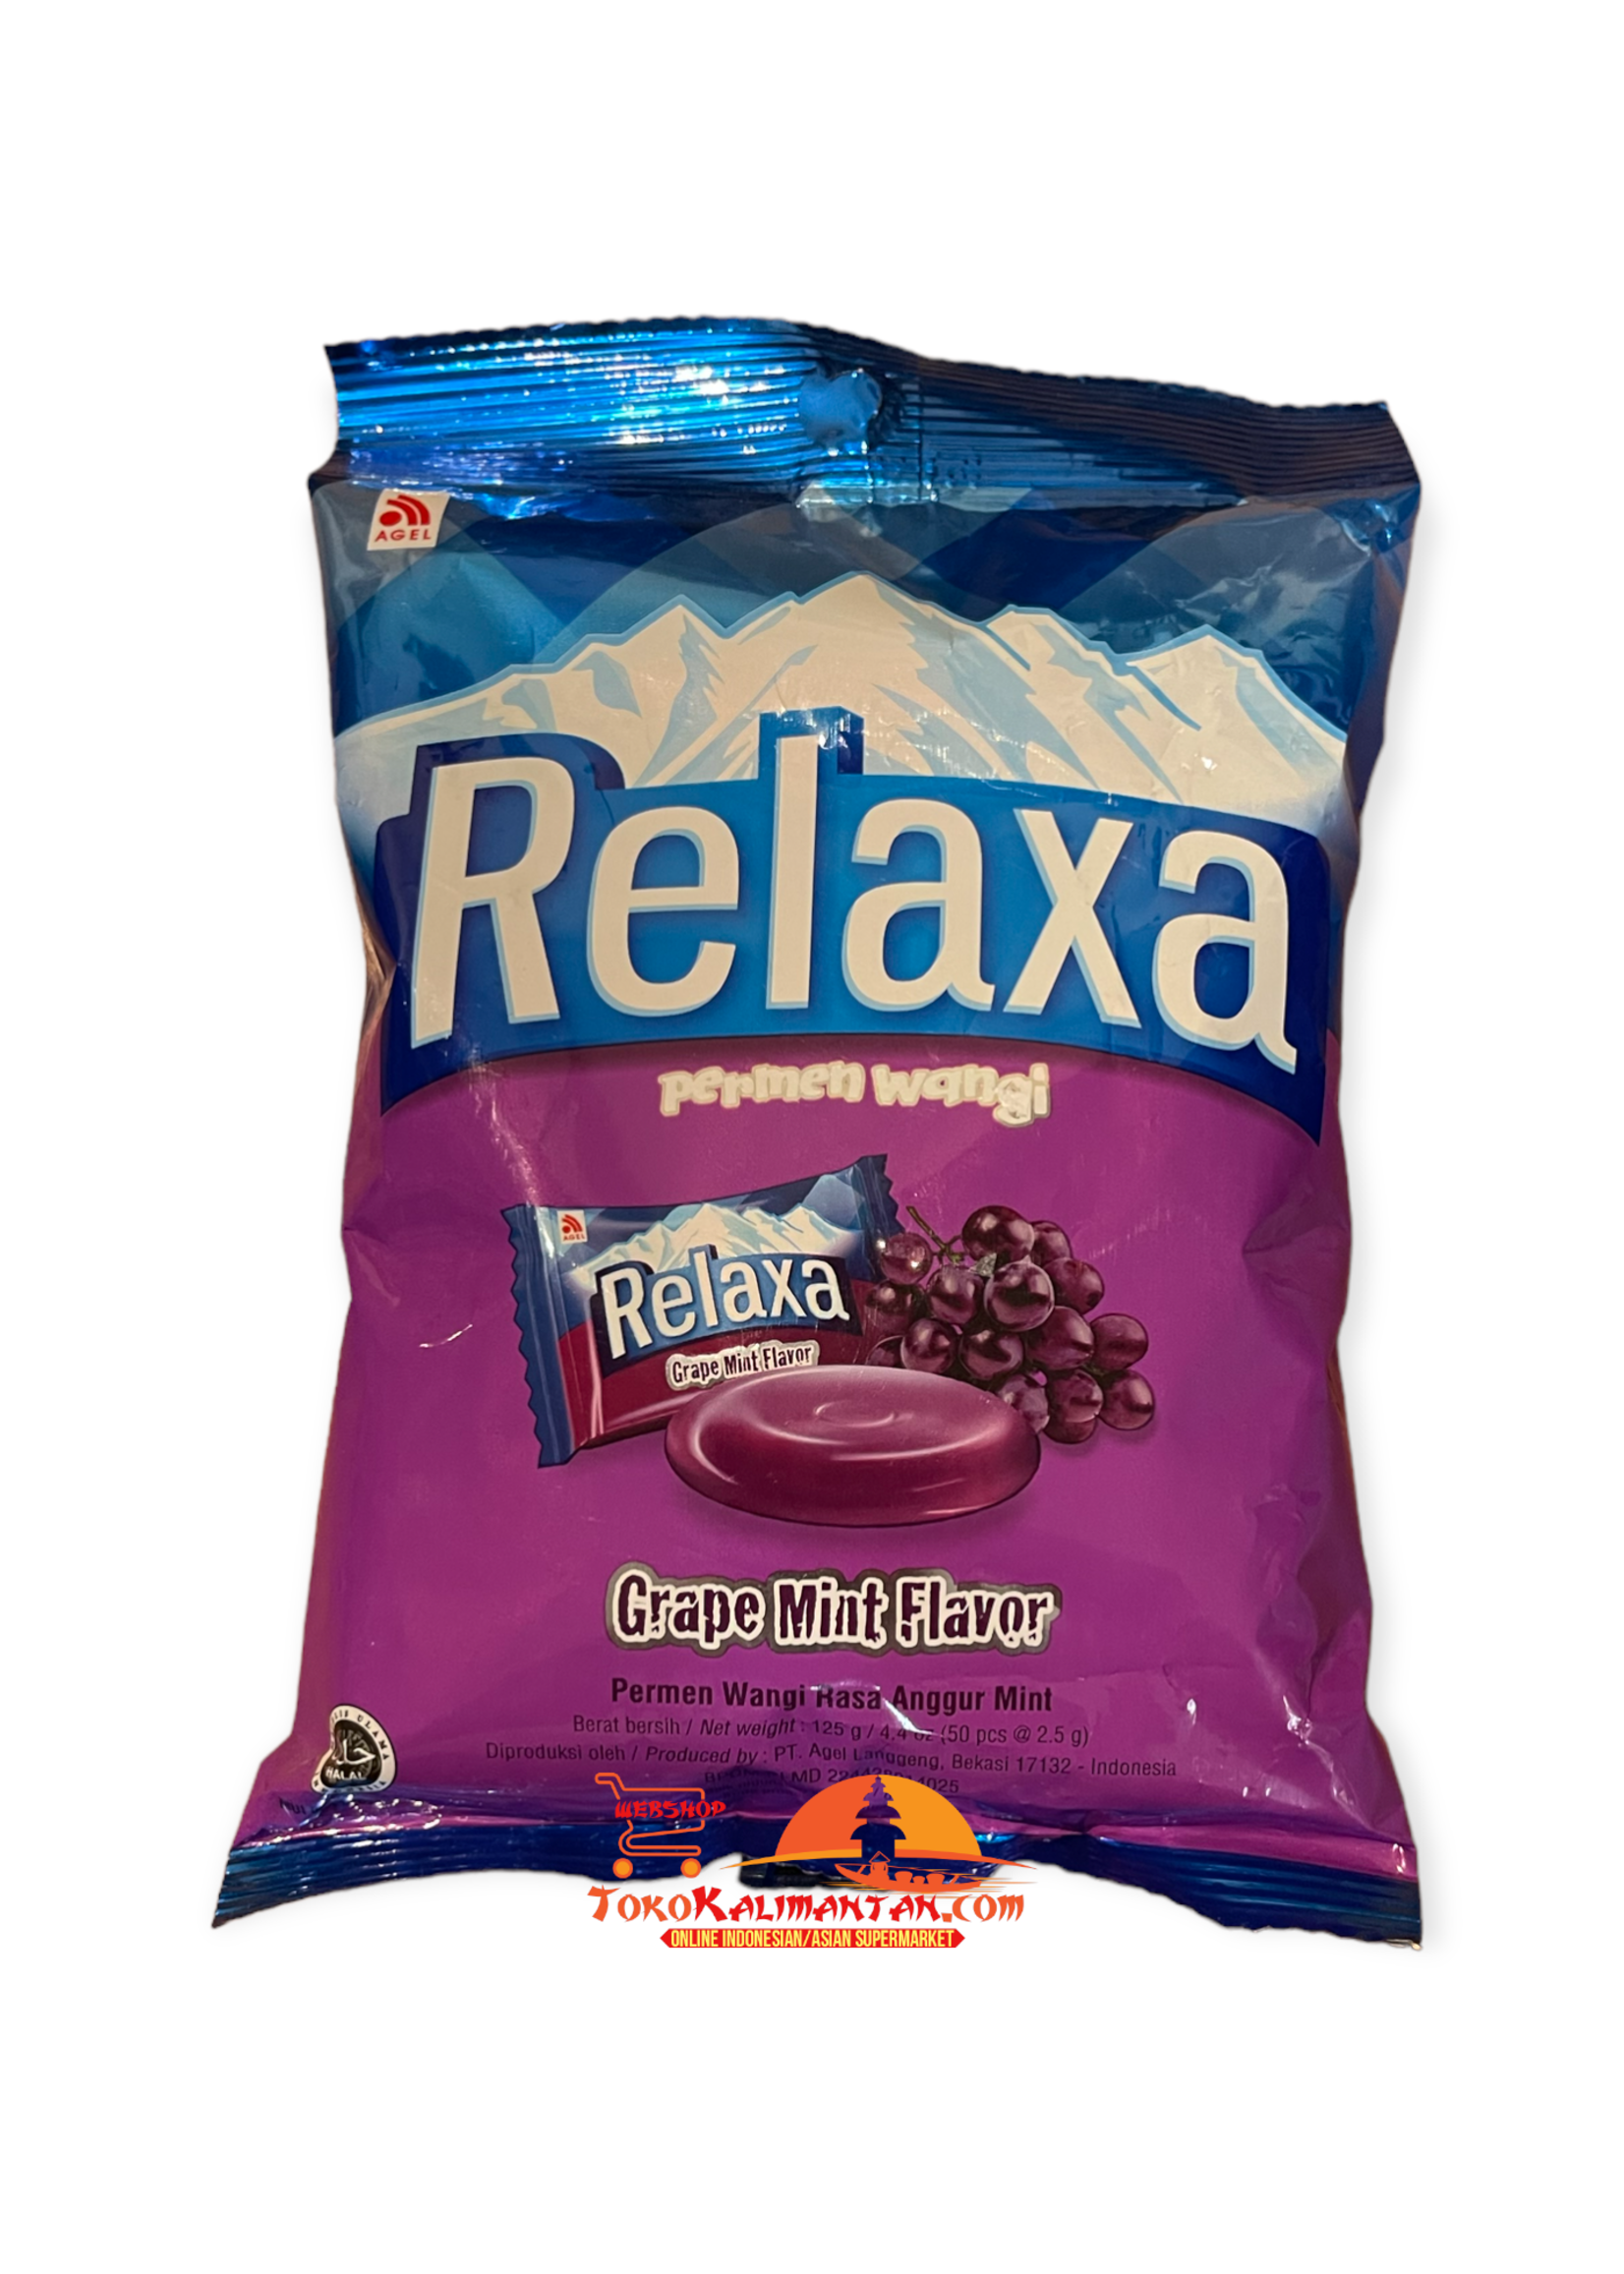 Relaxa Relaxa - permen wangi grape mint flavor